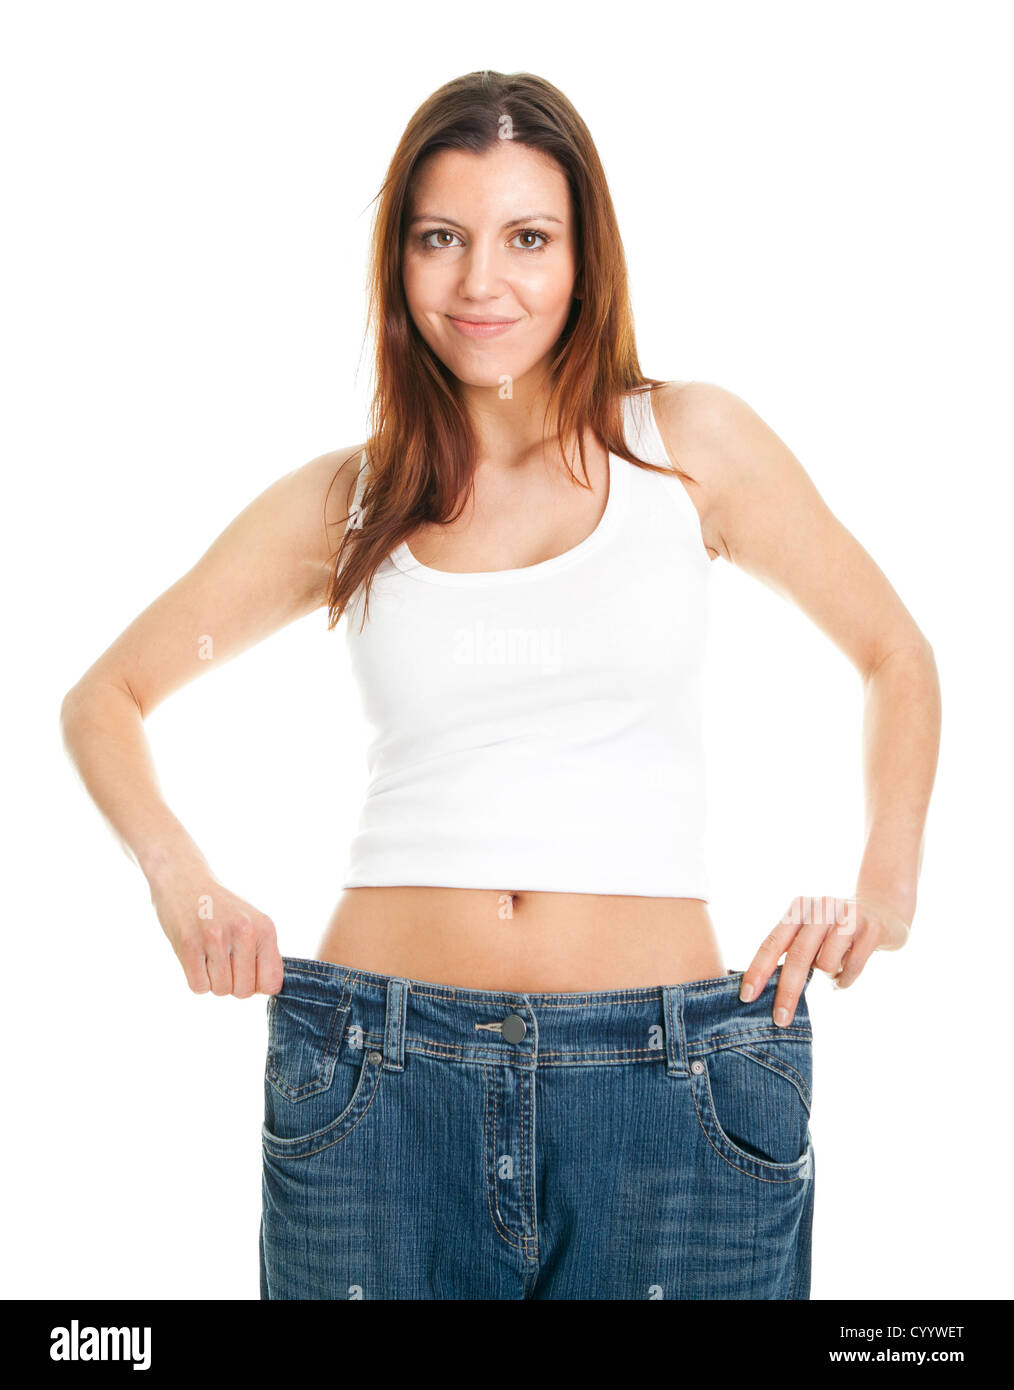 Slim woman pulling oversized jeans Stock Photo